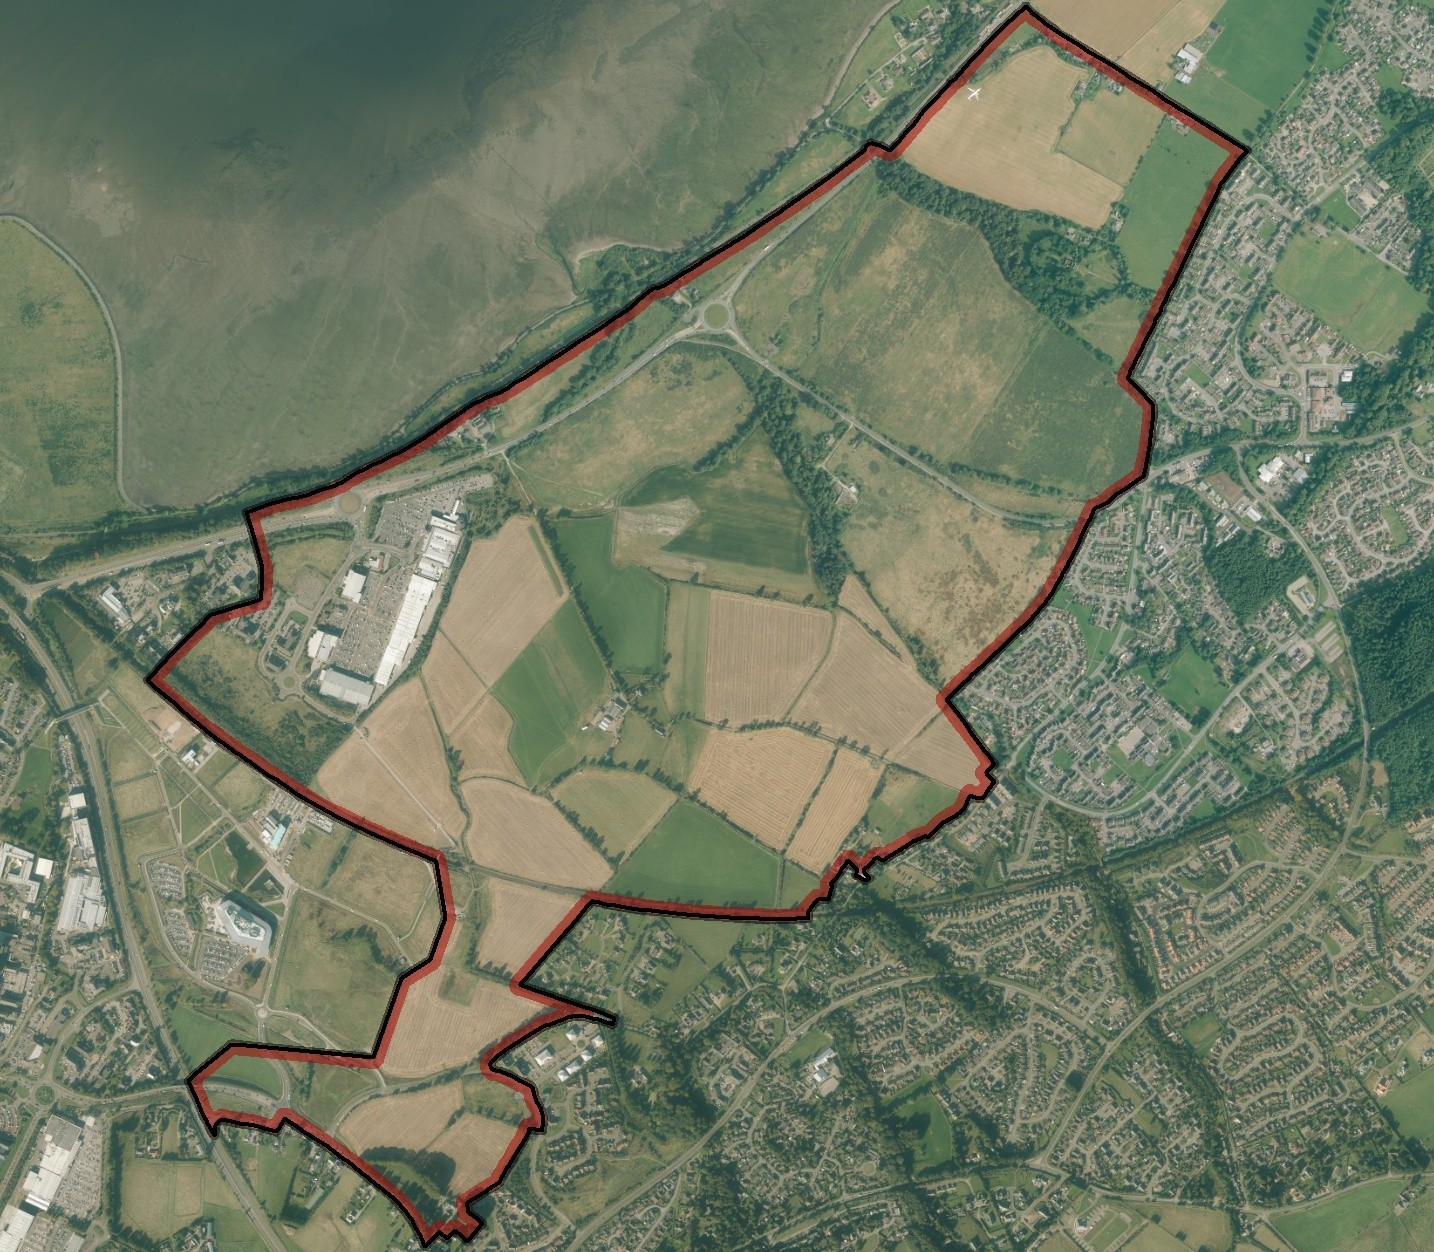 Plans for East Inverness development